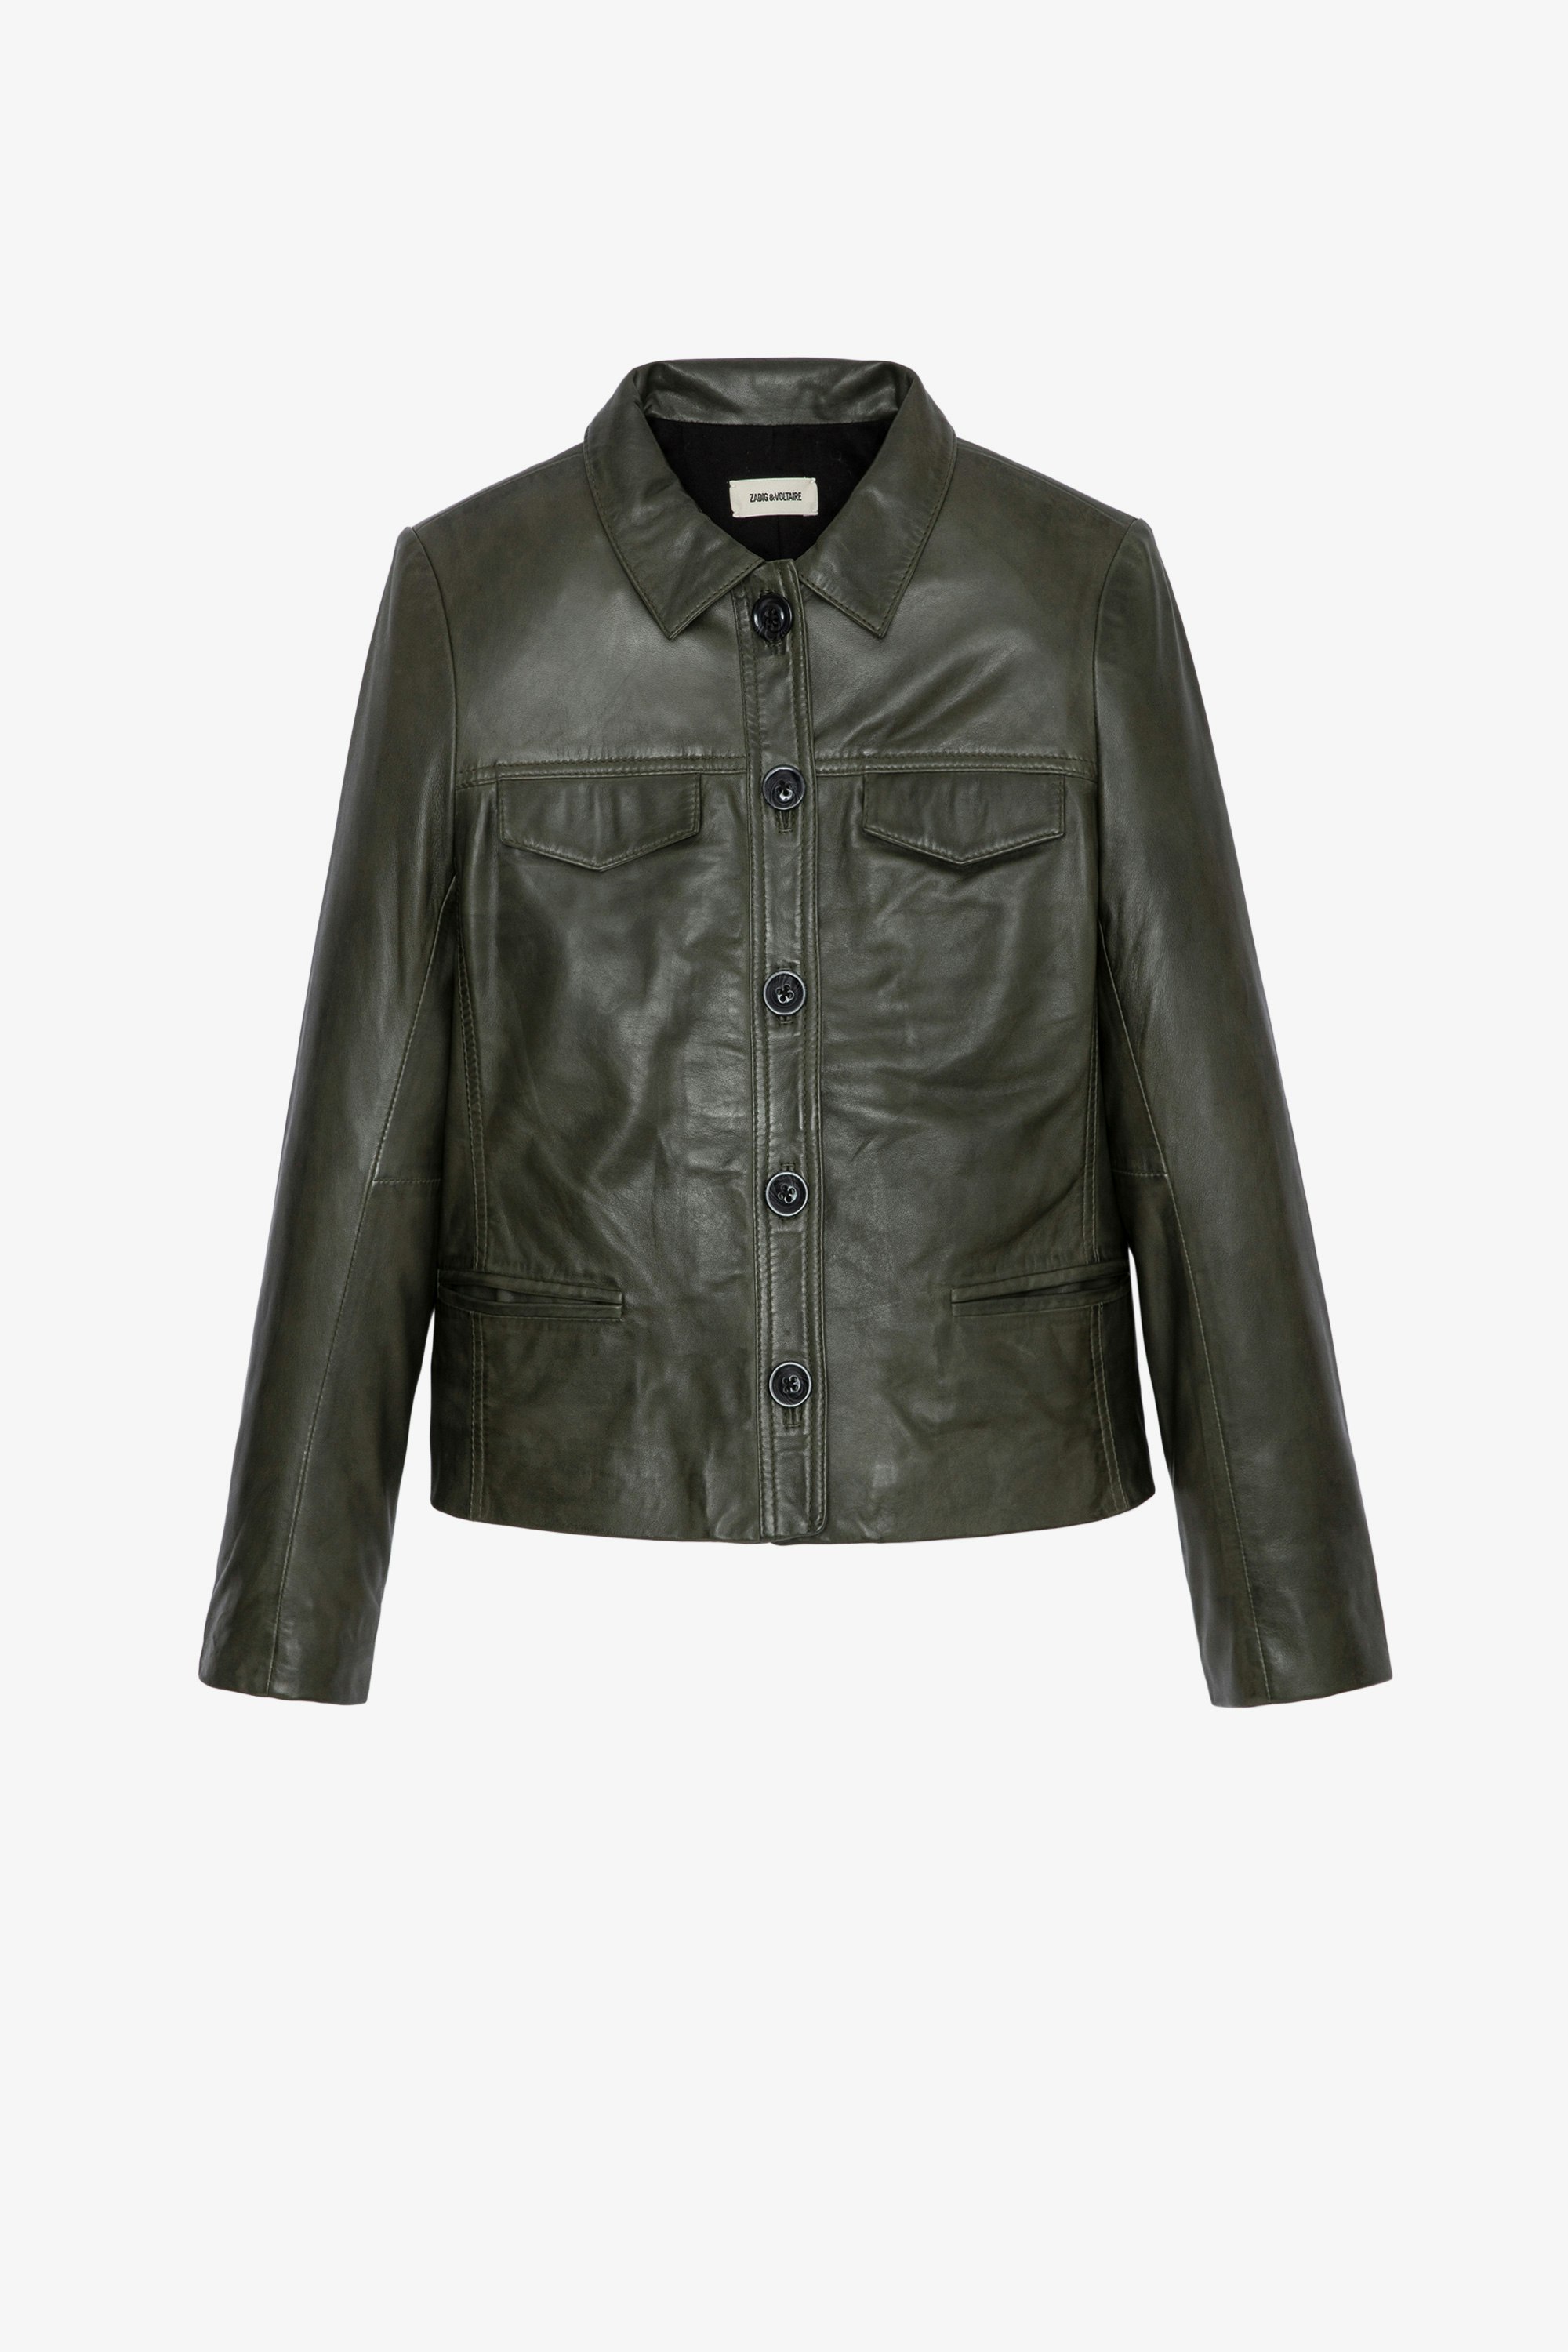 Liam Leather Jacket Women’s green leather jacket